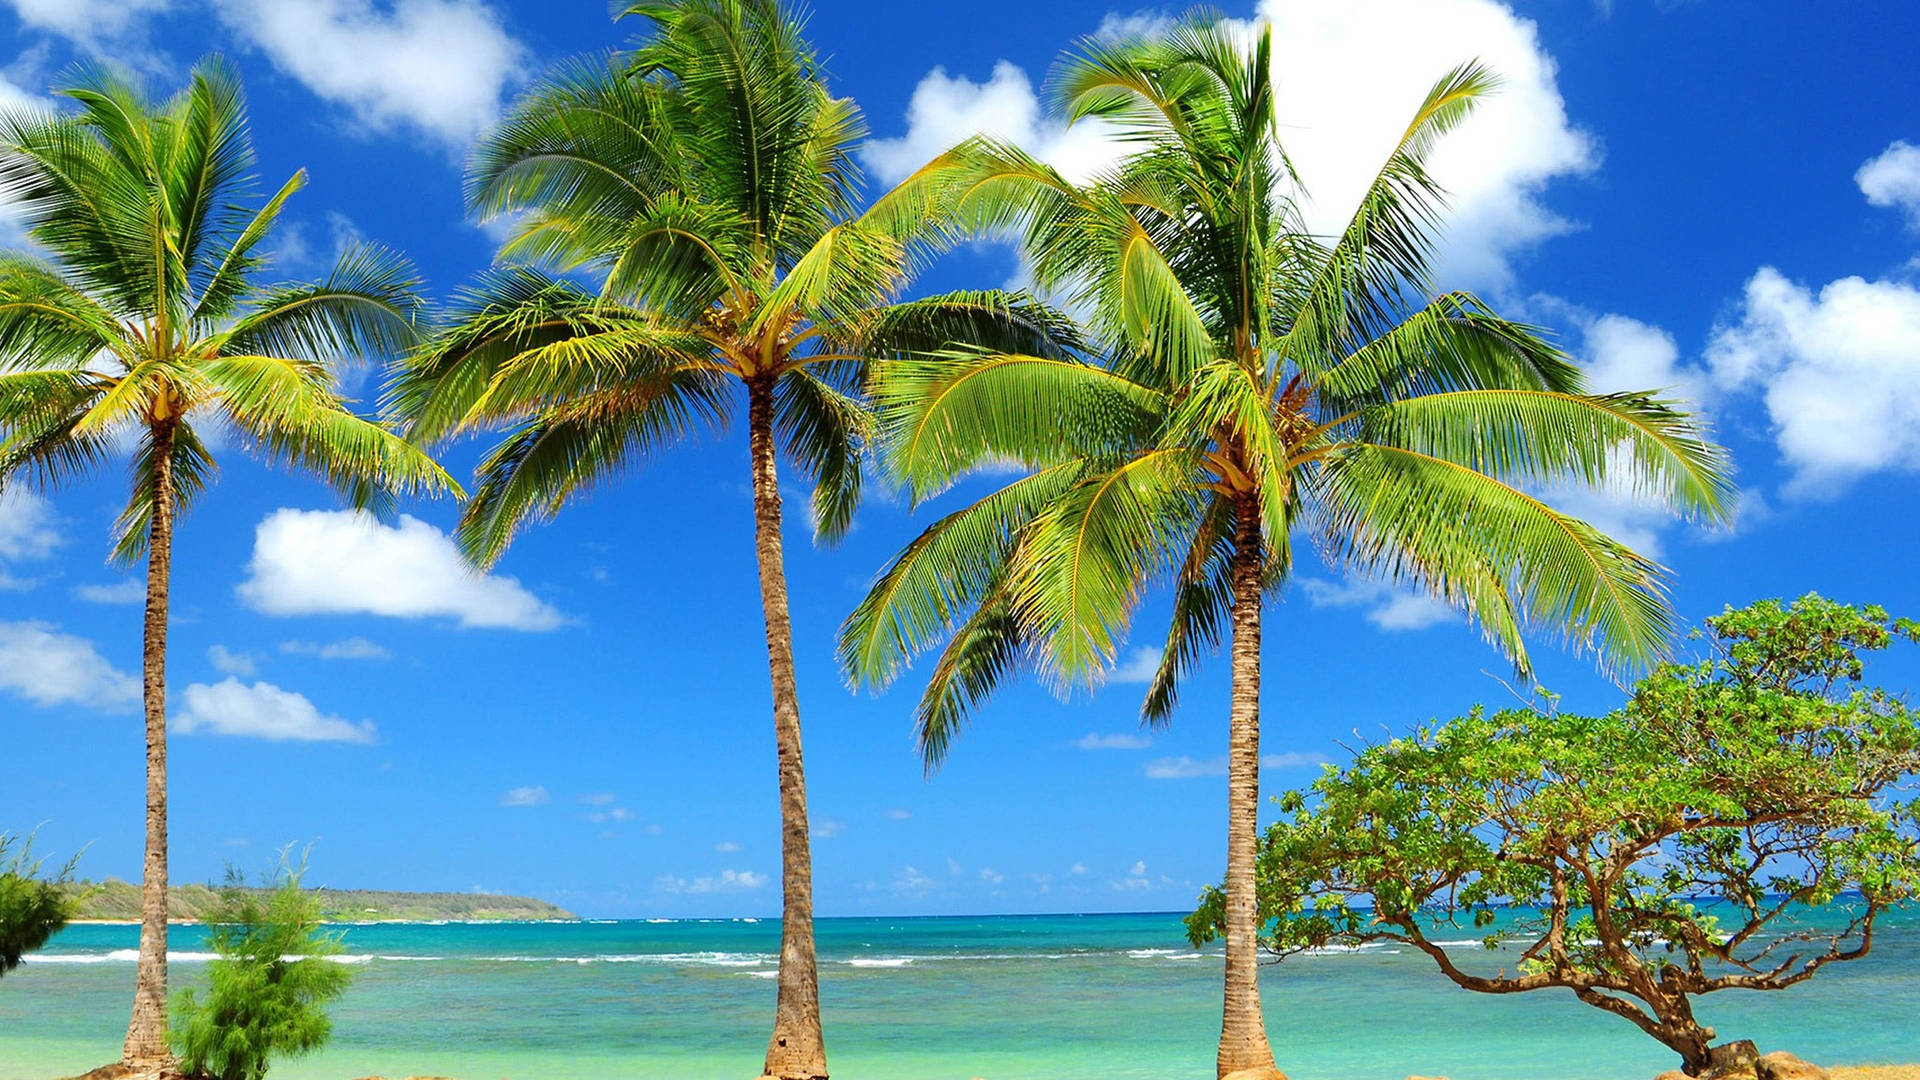 Download Kiribati Island Palm Trees Wallpaper